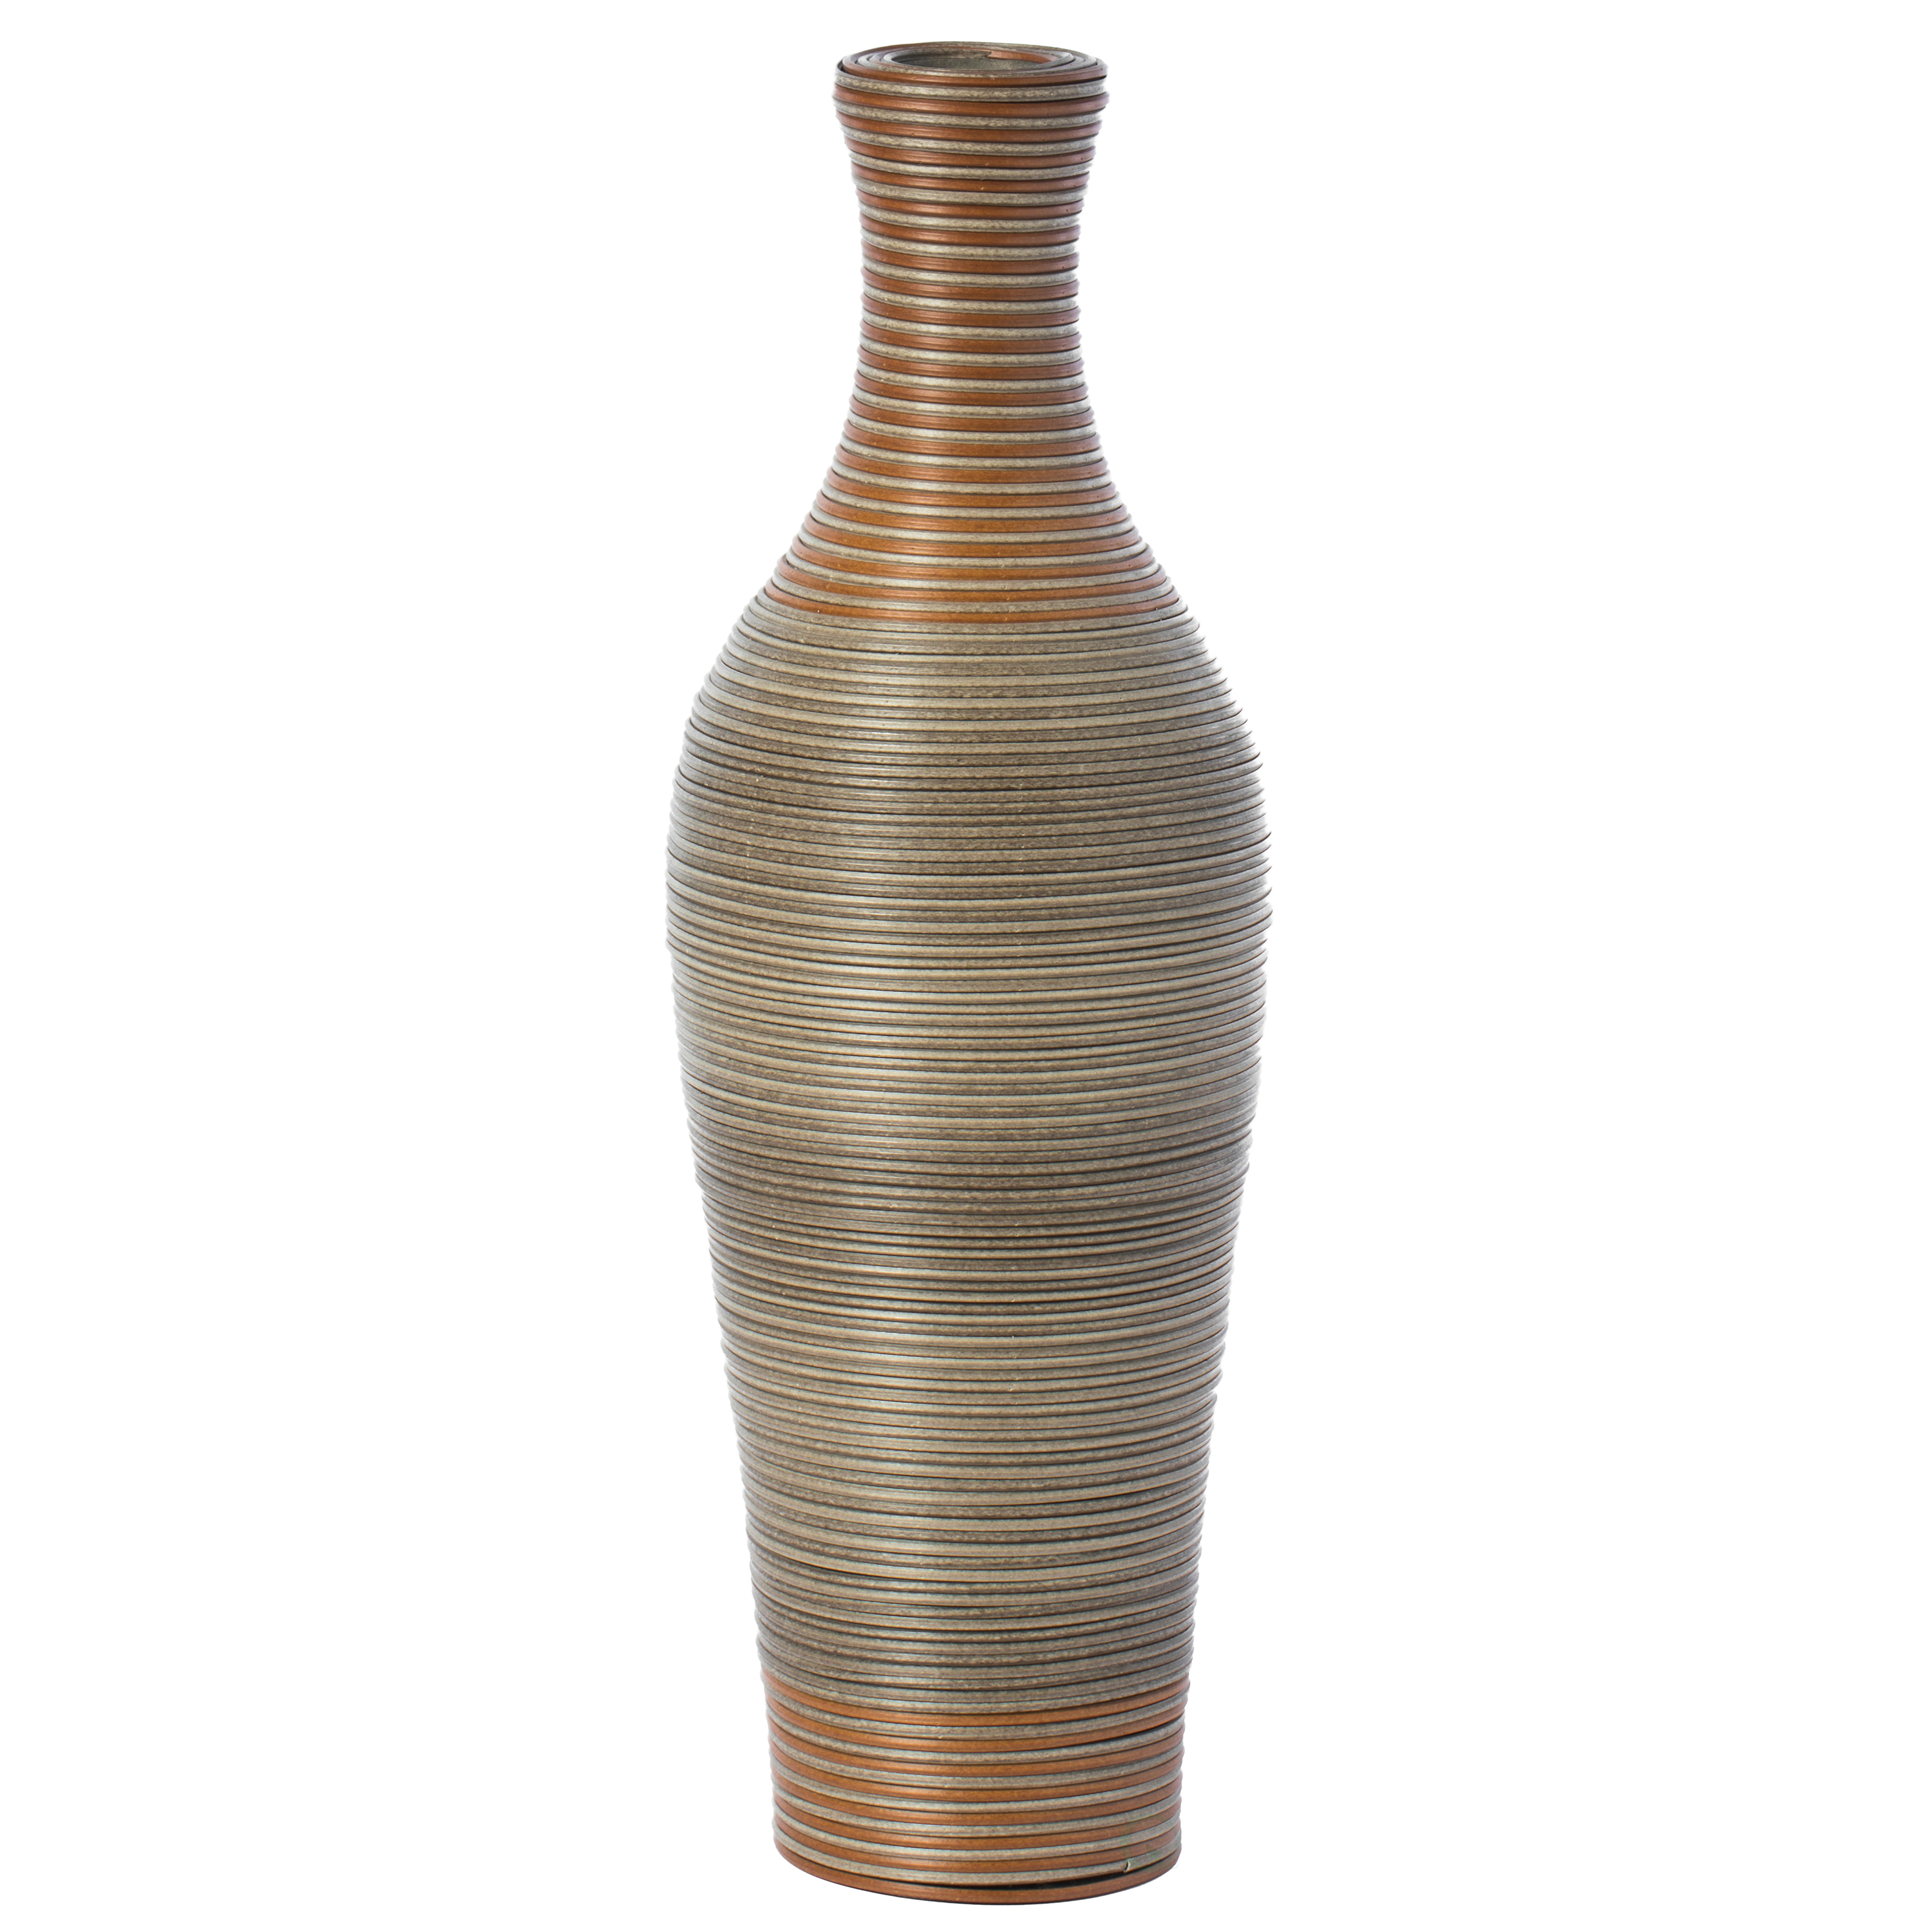 27 Inch Tall Decorative Artificial Rattan Tabletop Centerpiece Vase